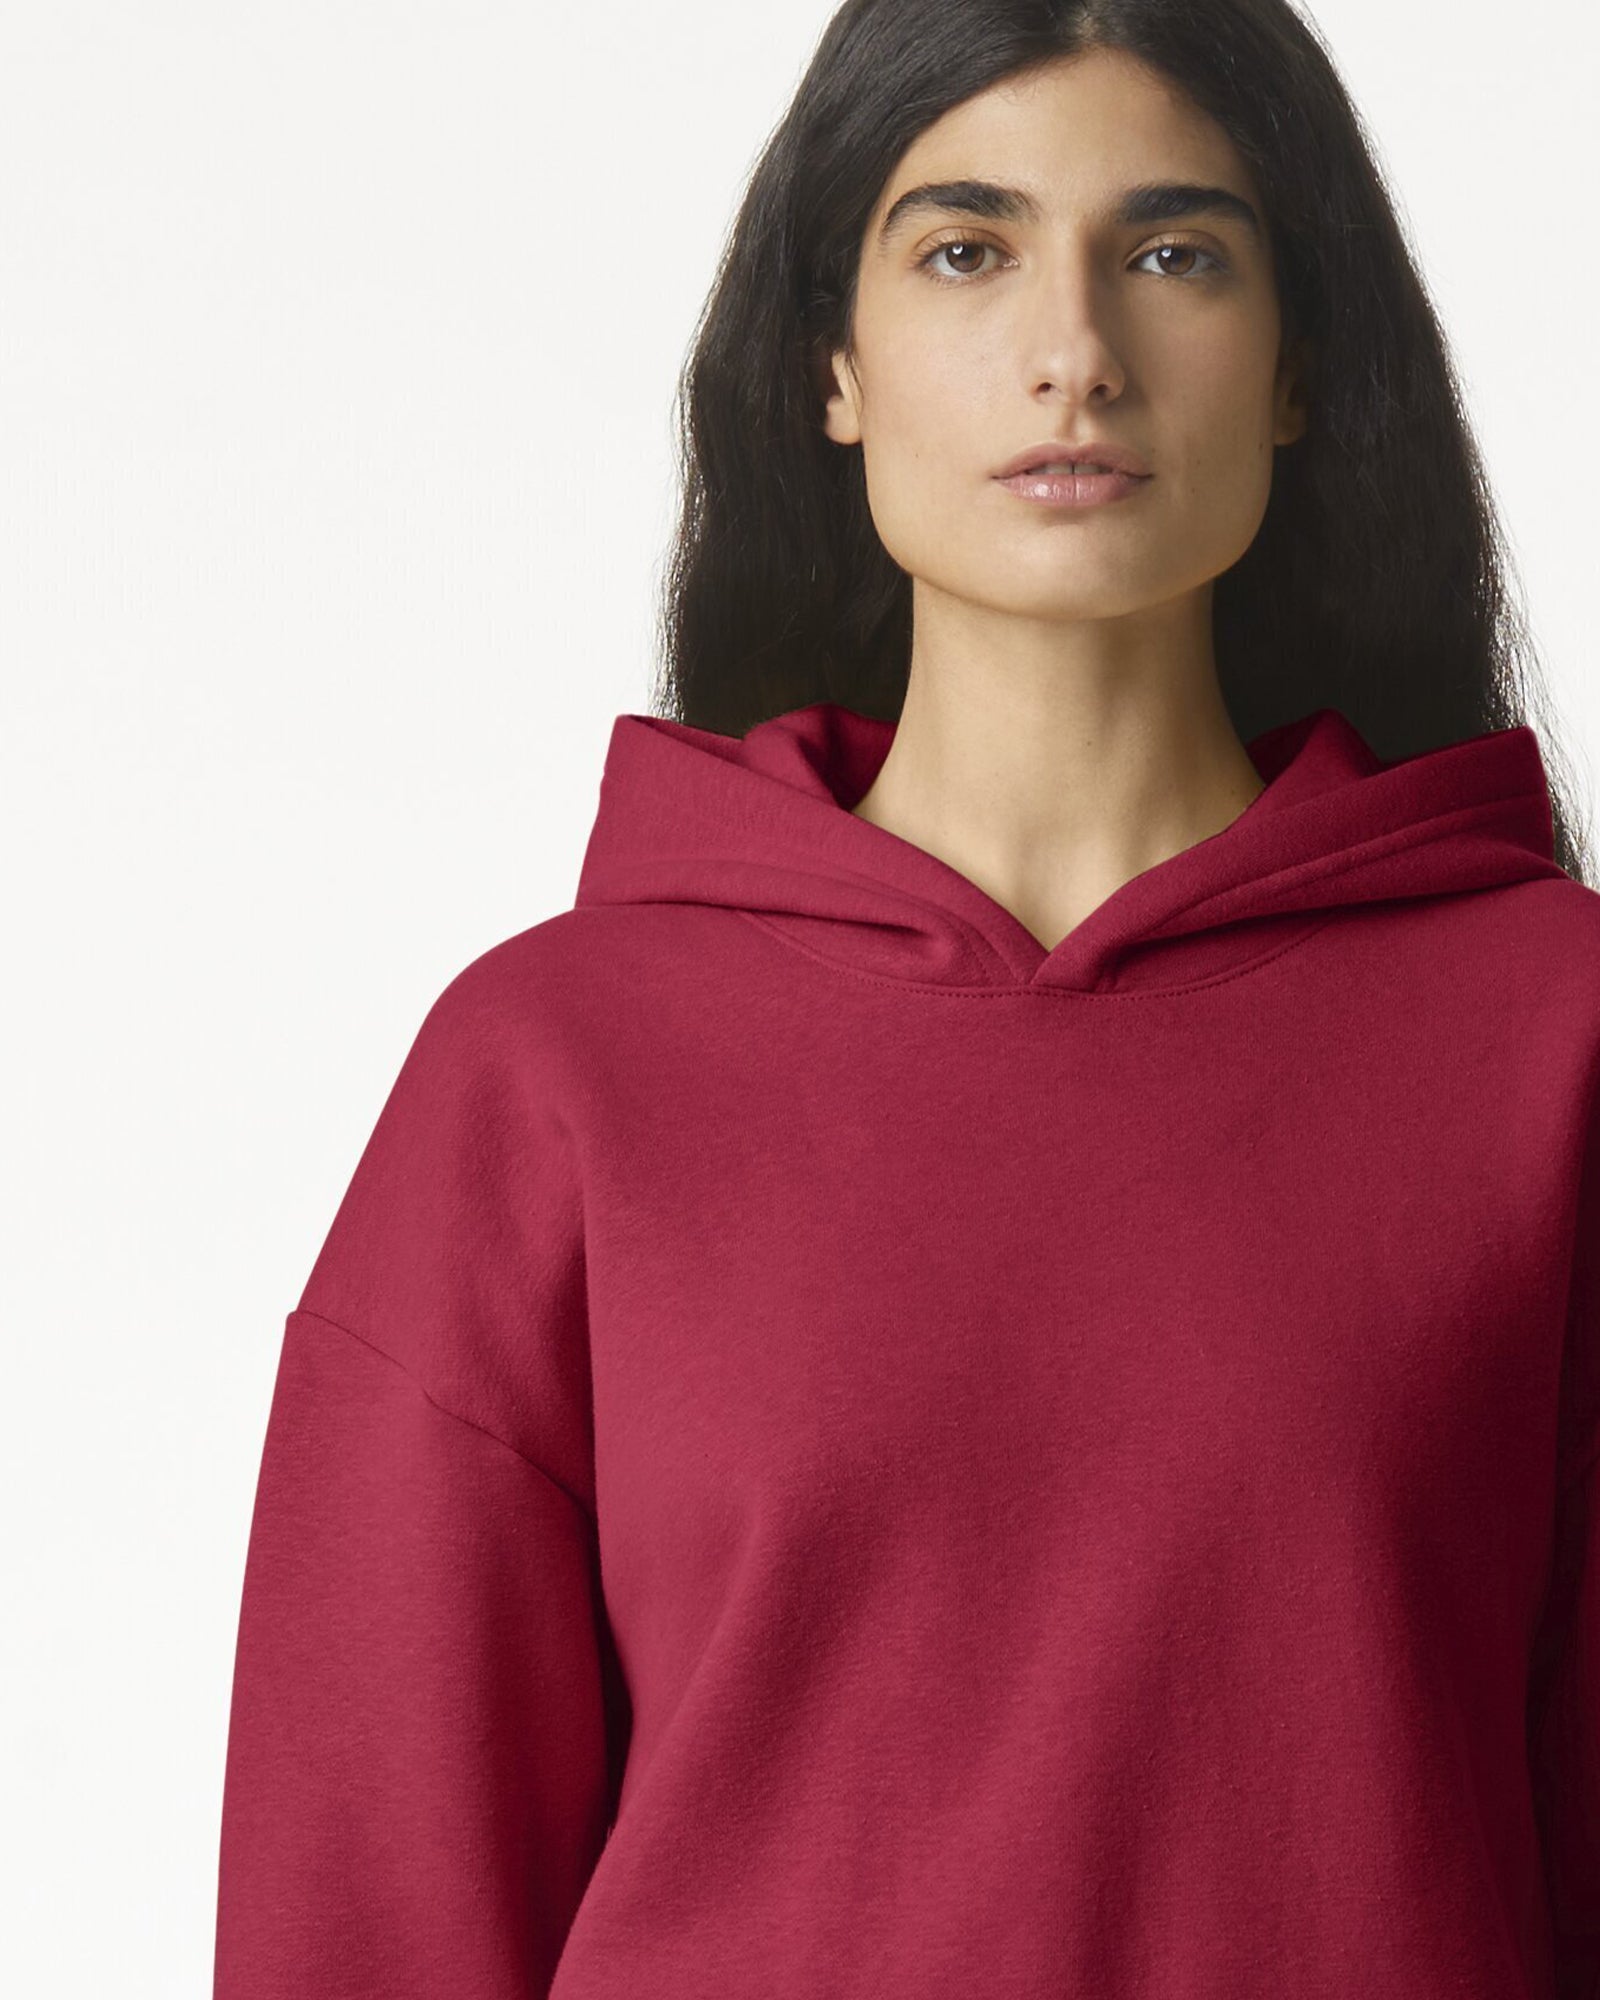 Reflex Unisex Hooded Sweatshirt